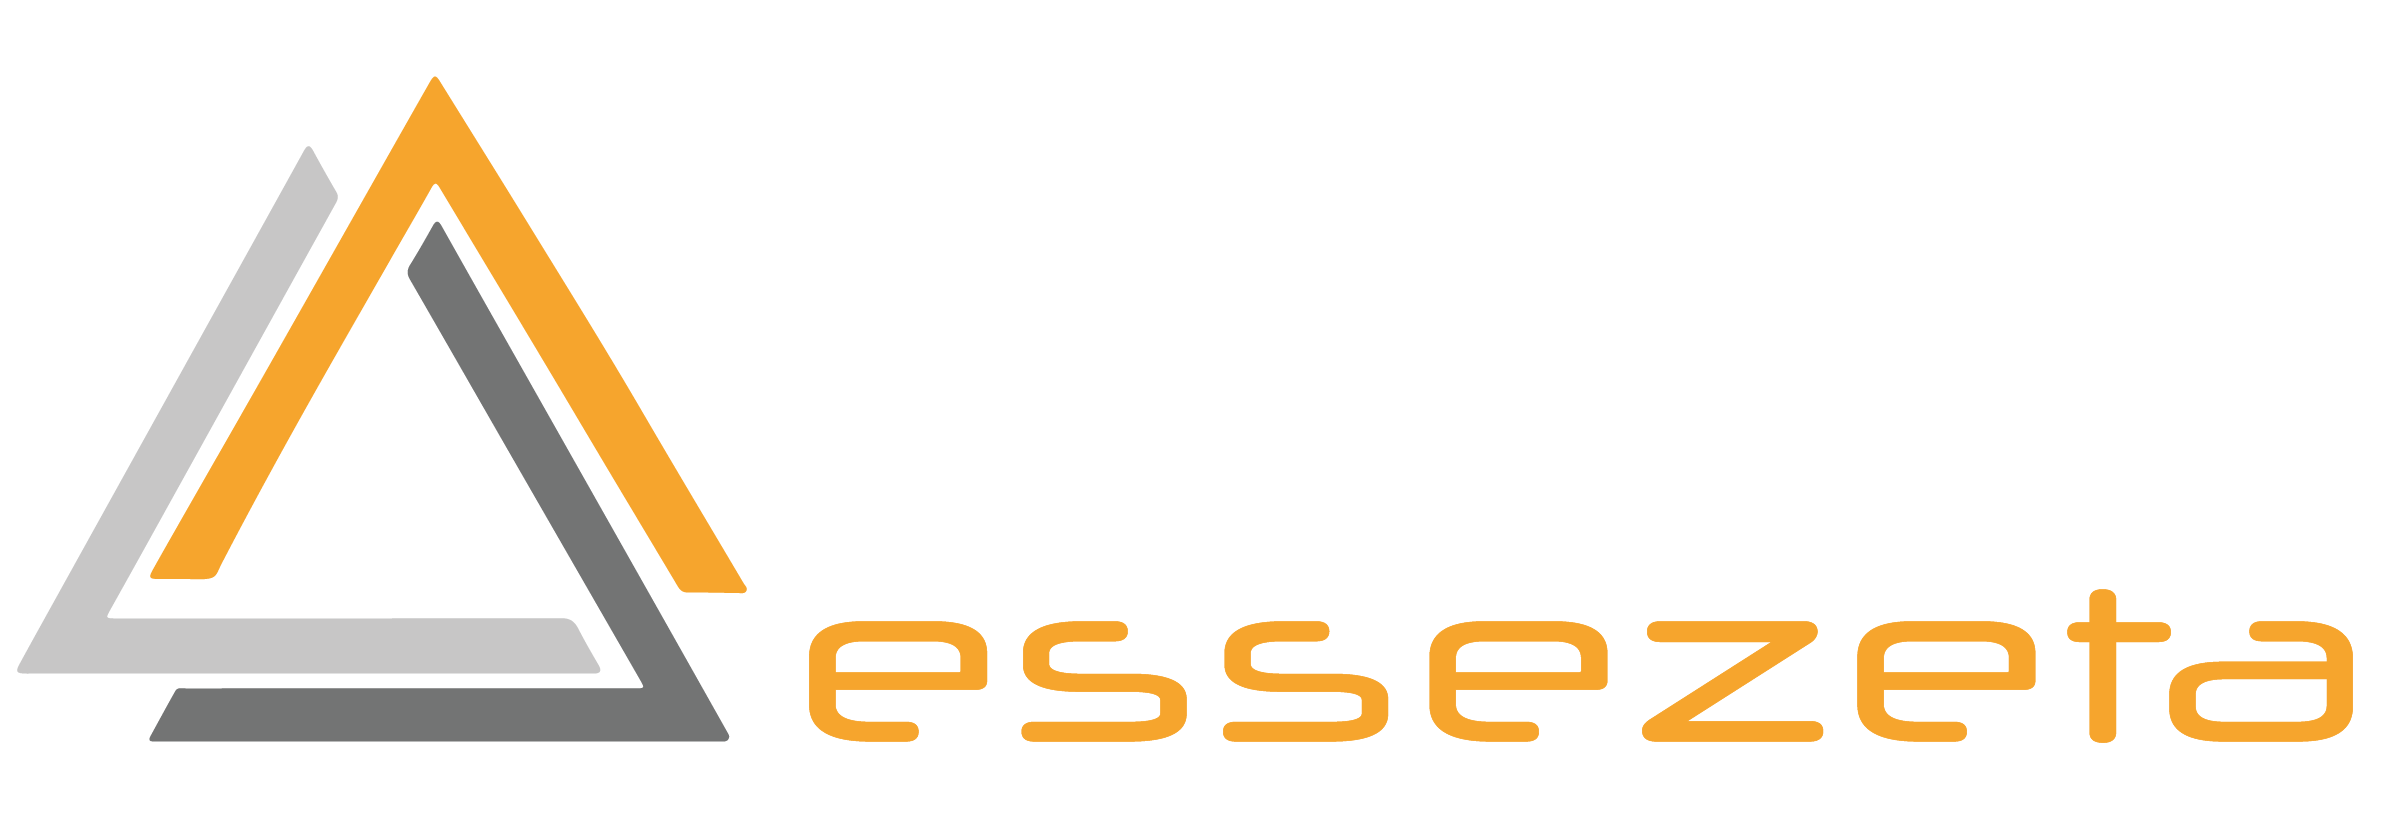 ESSEZETA-logo